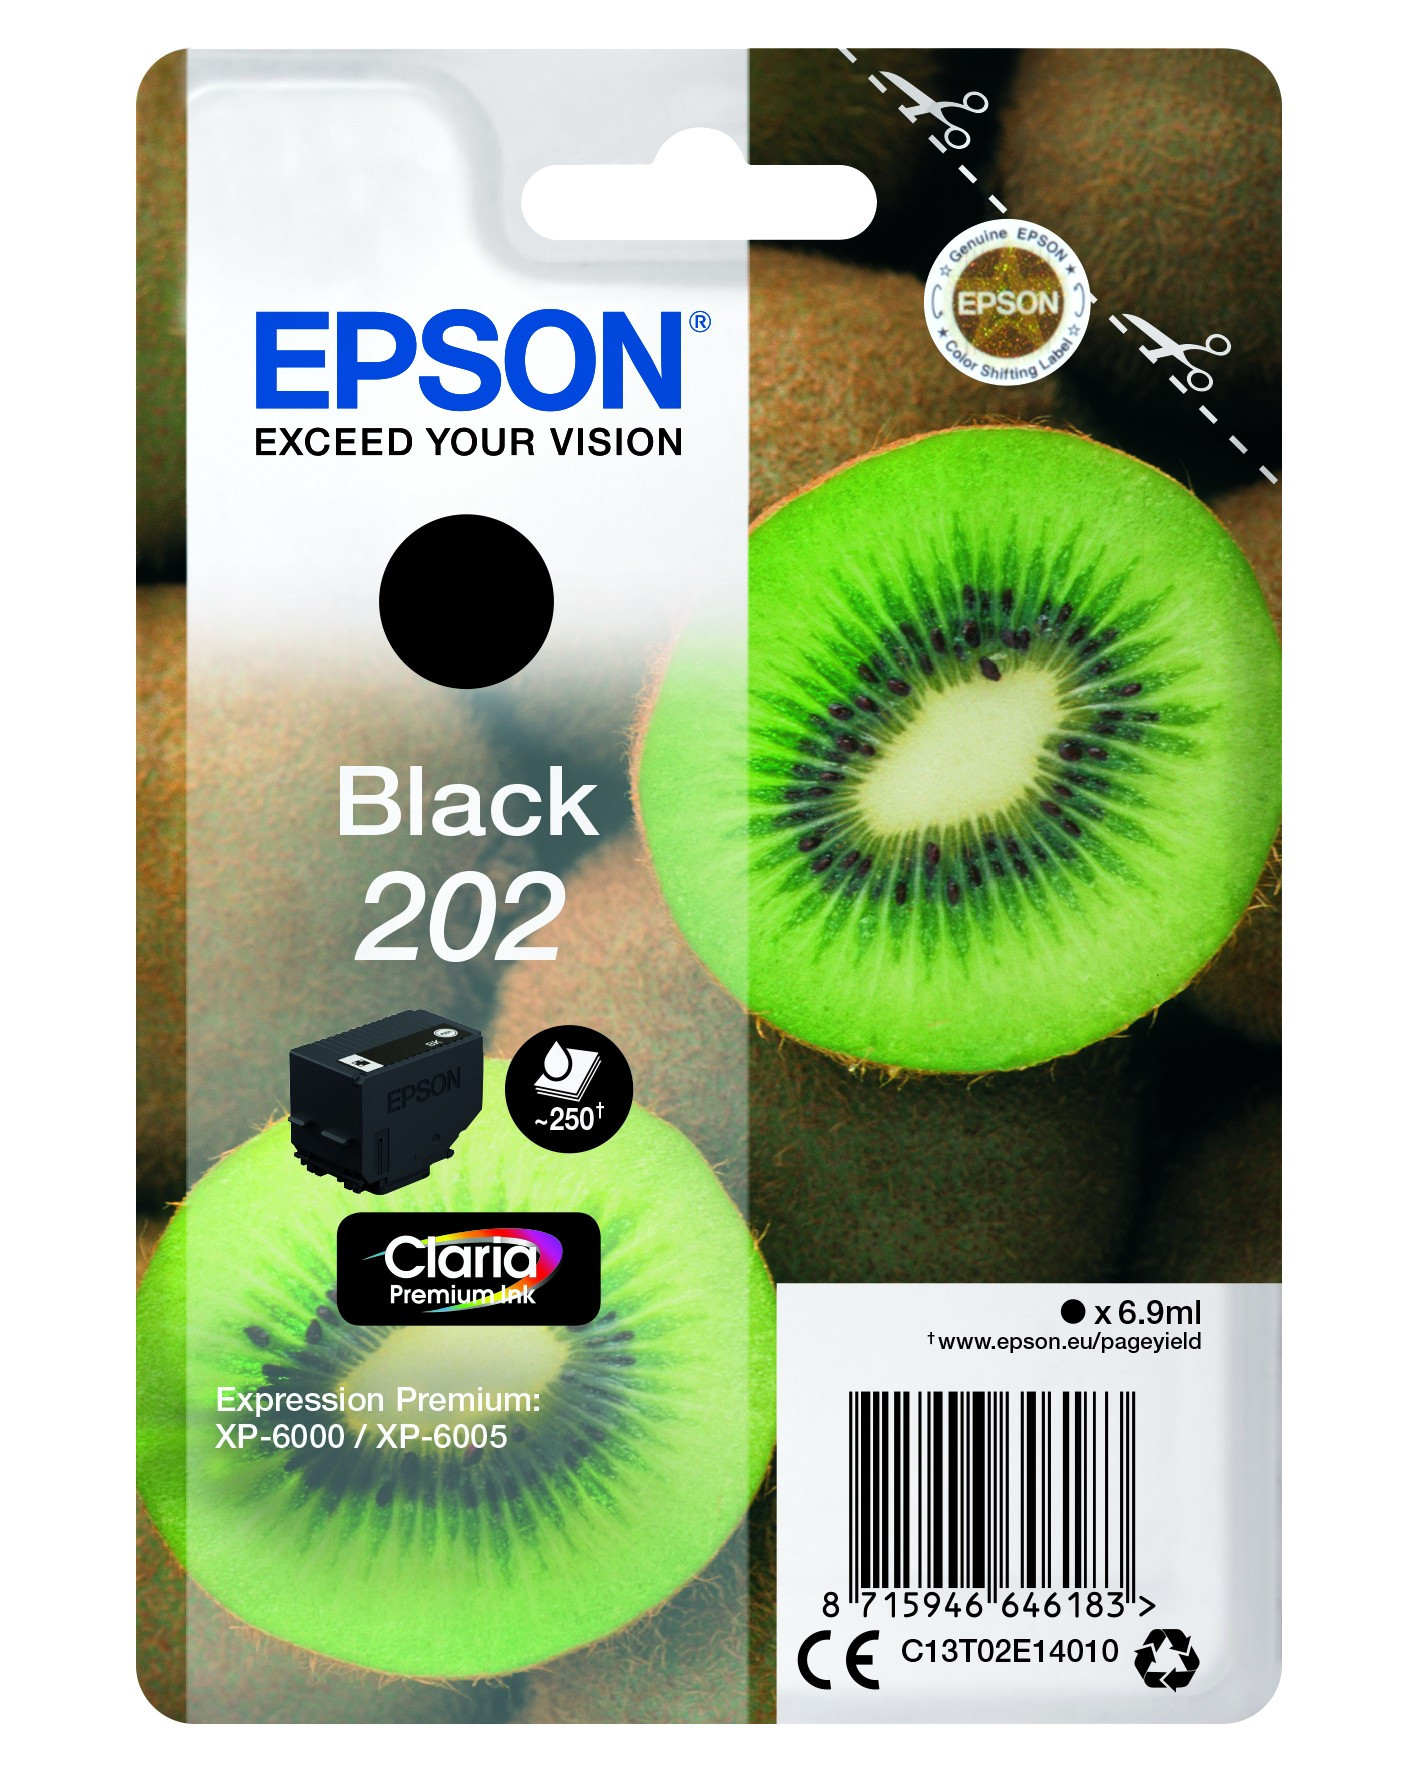 Epson T02E1 Tintapatron Black 6,9ml No.202 (C13T02E14010)